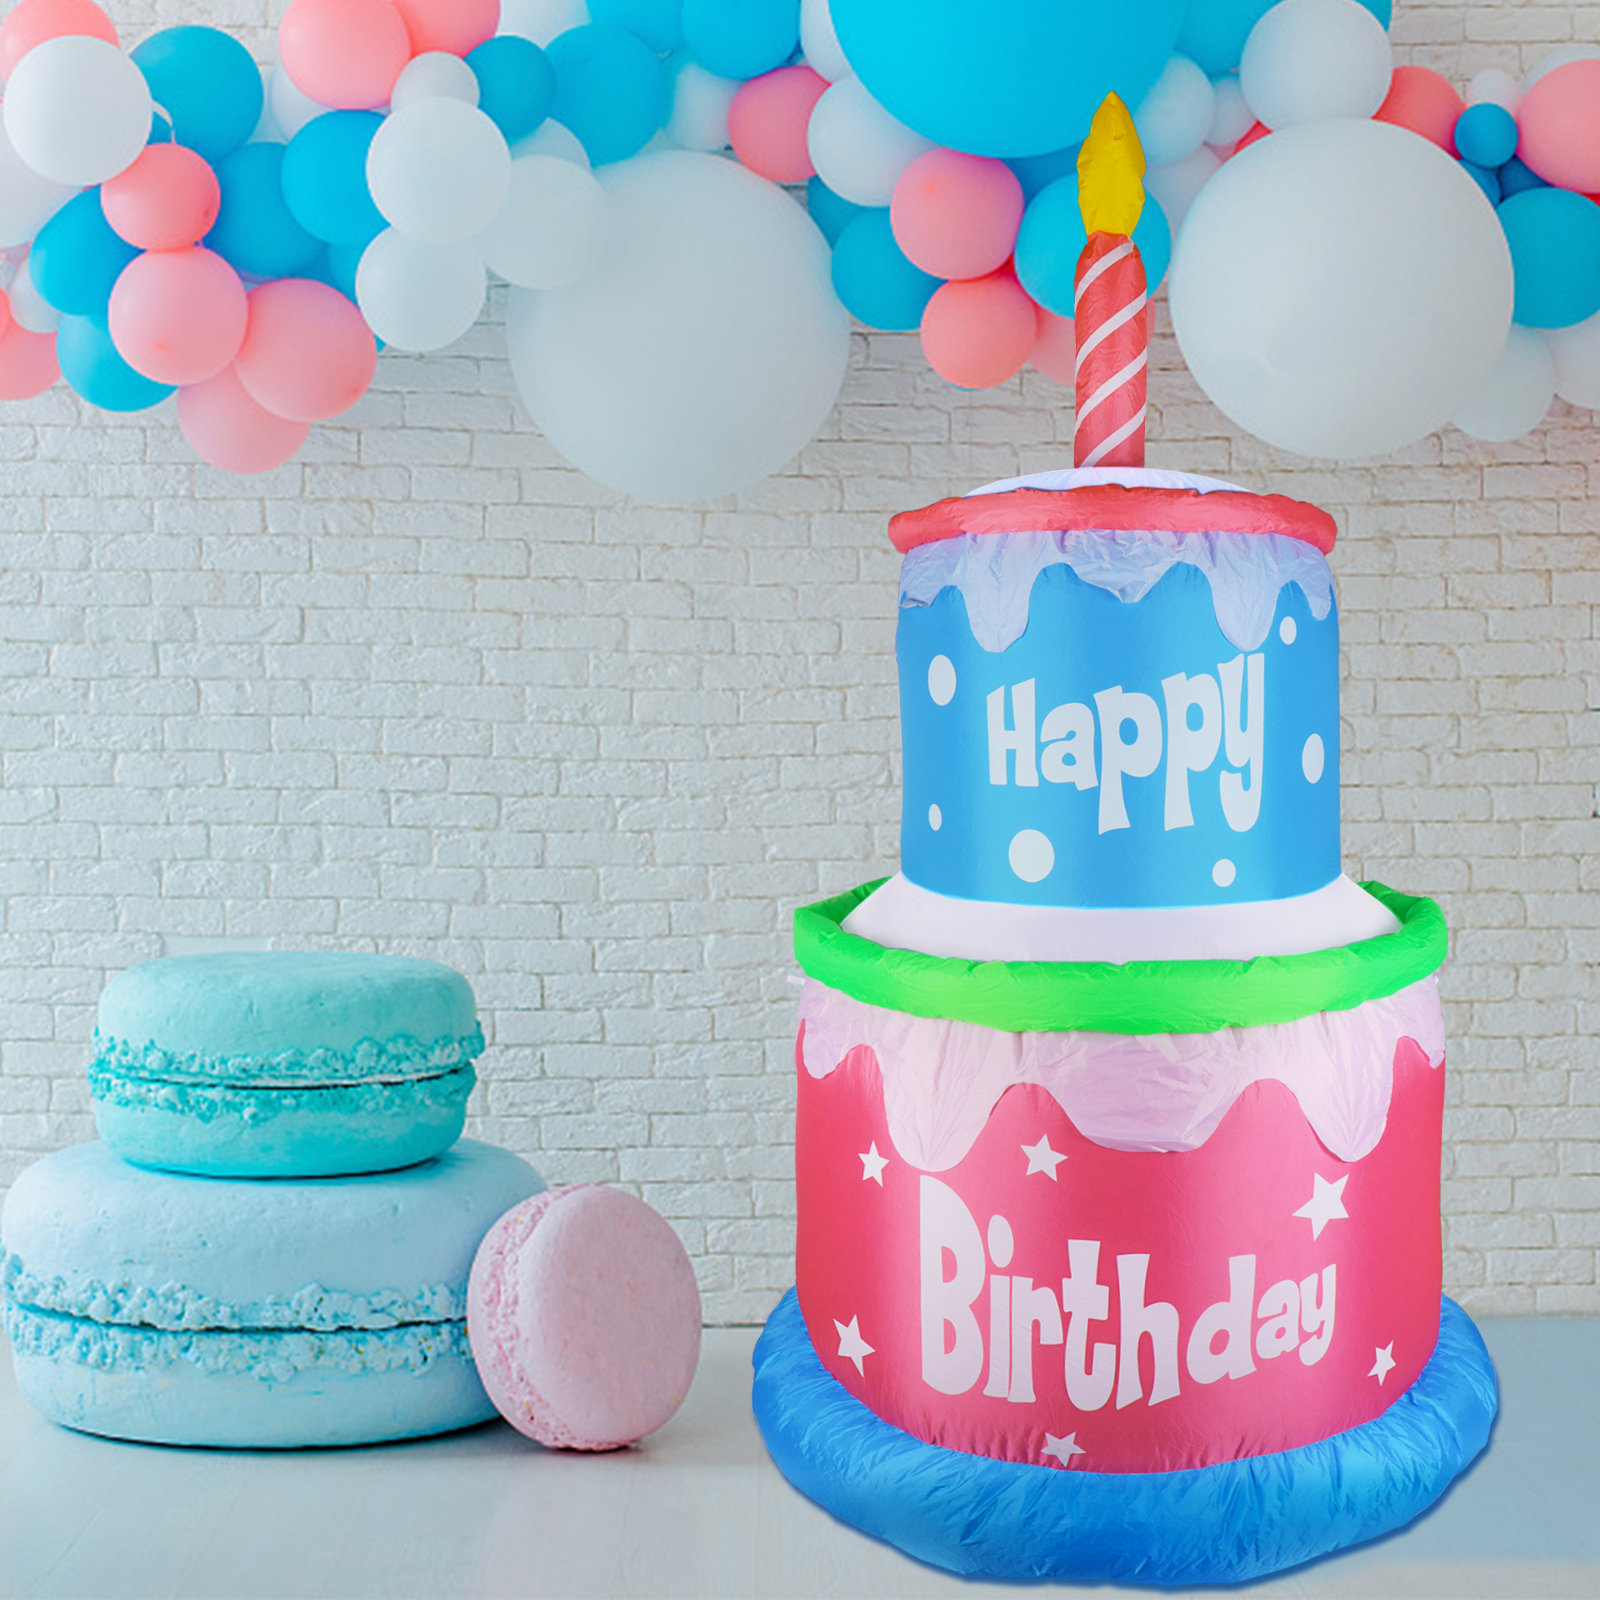 4 Ft Inflatable Happy Birthday Cake Decorations India | Ubuy